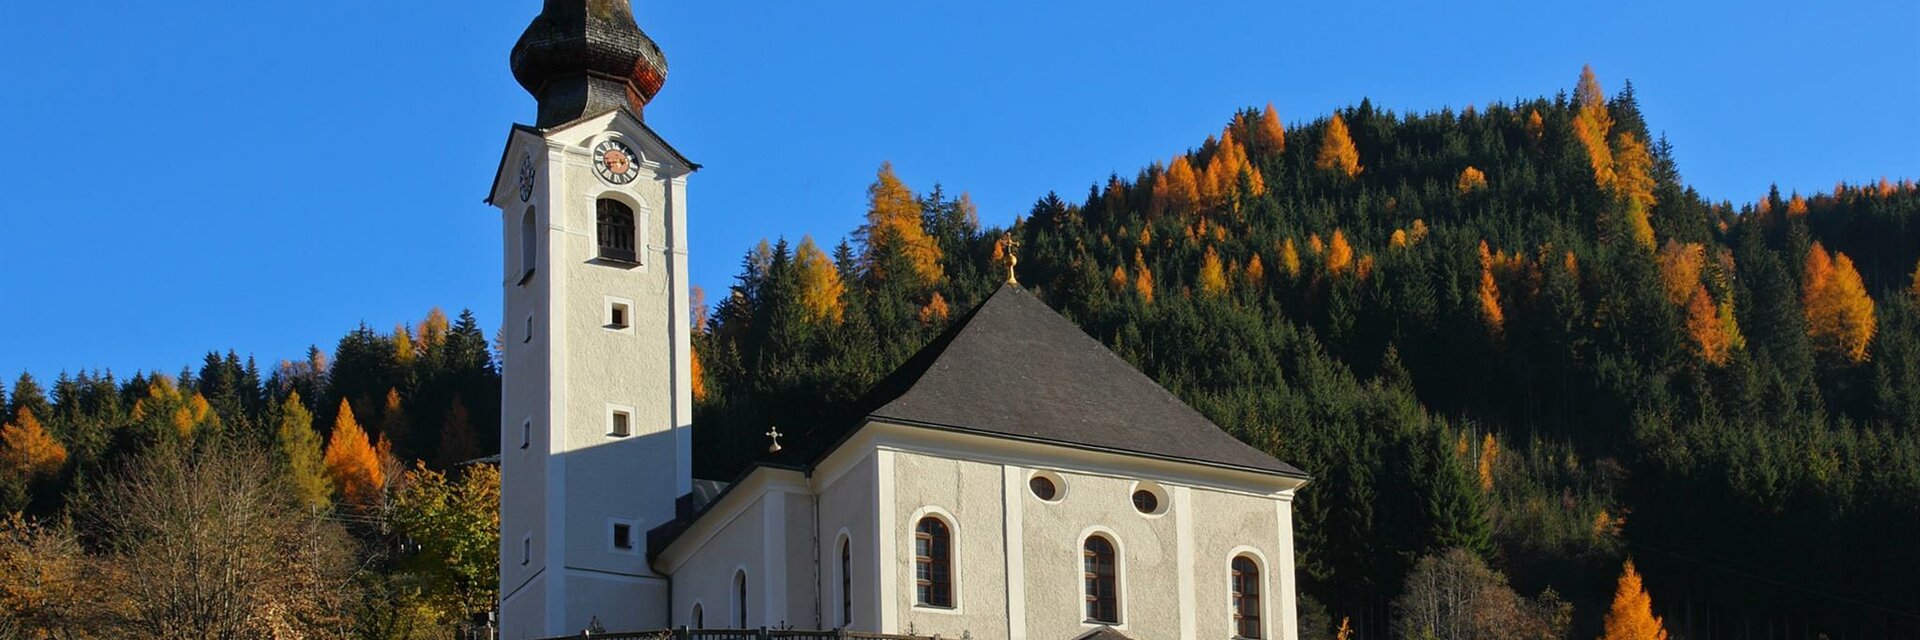 Kirche Großarl im Herbst